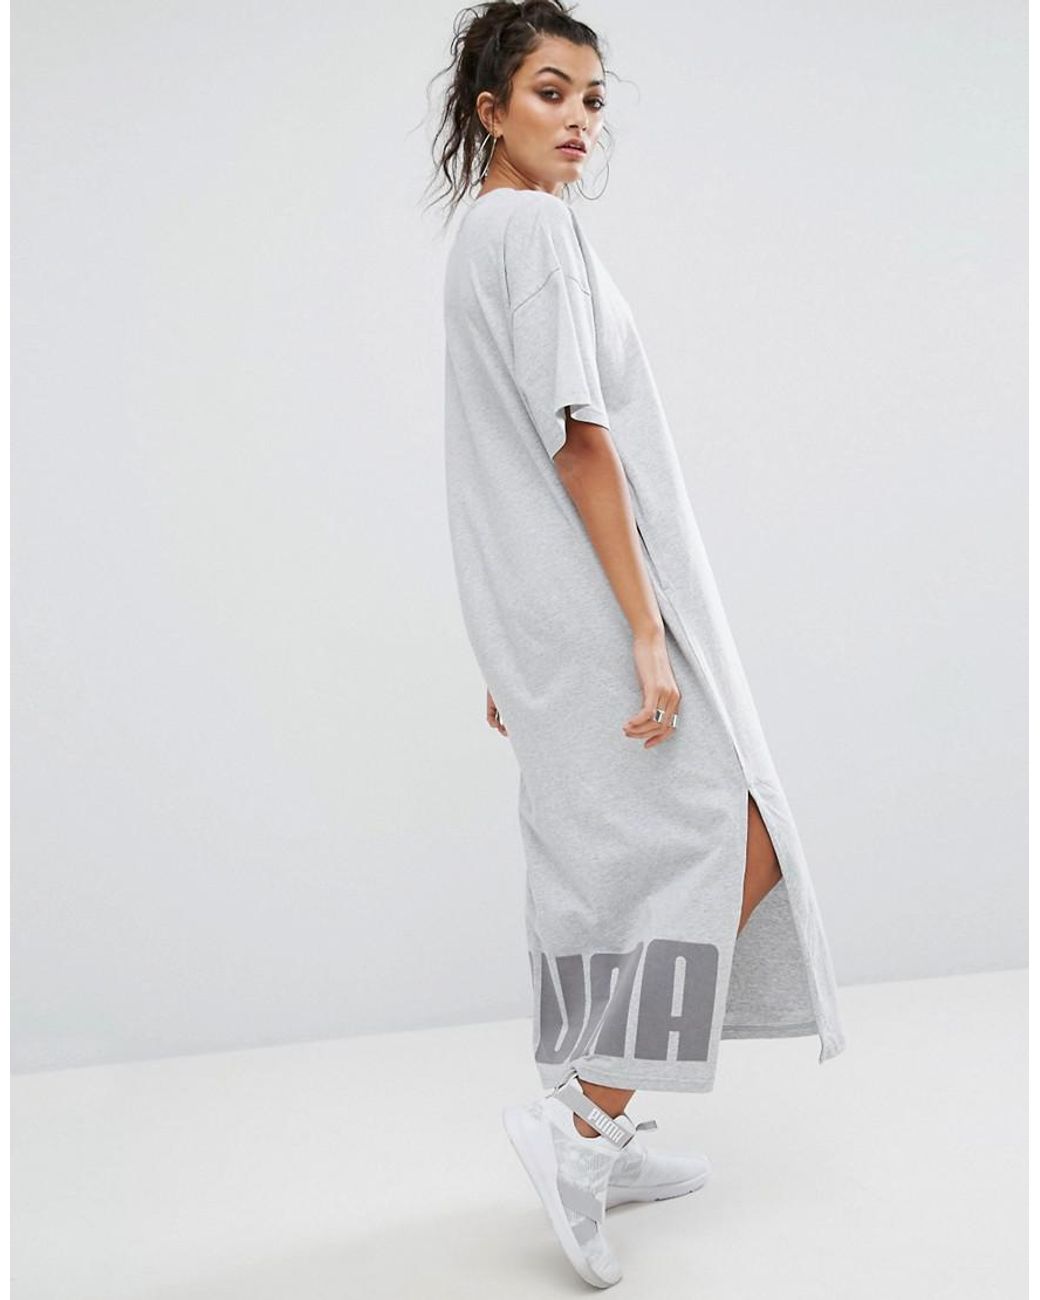 PUMA T-shirt Maxi Dress In Grey in Gray | Lyst